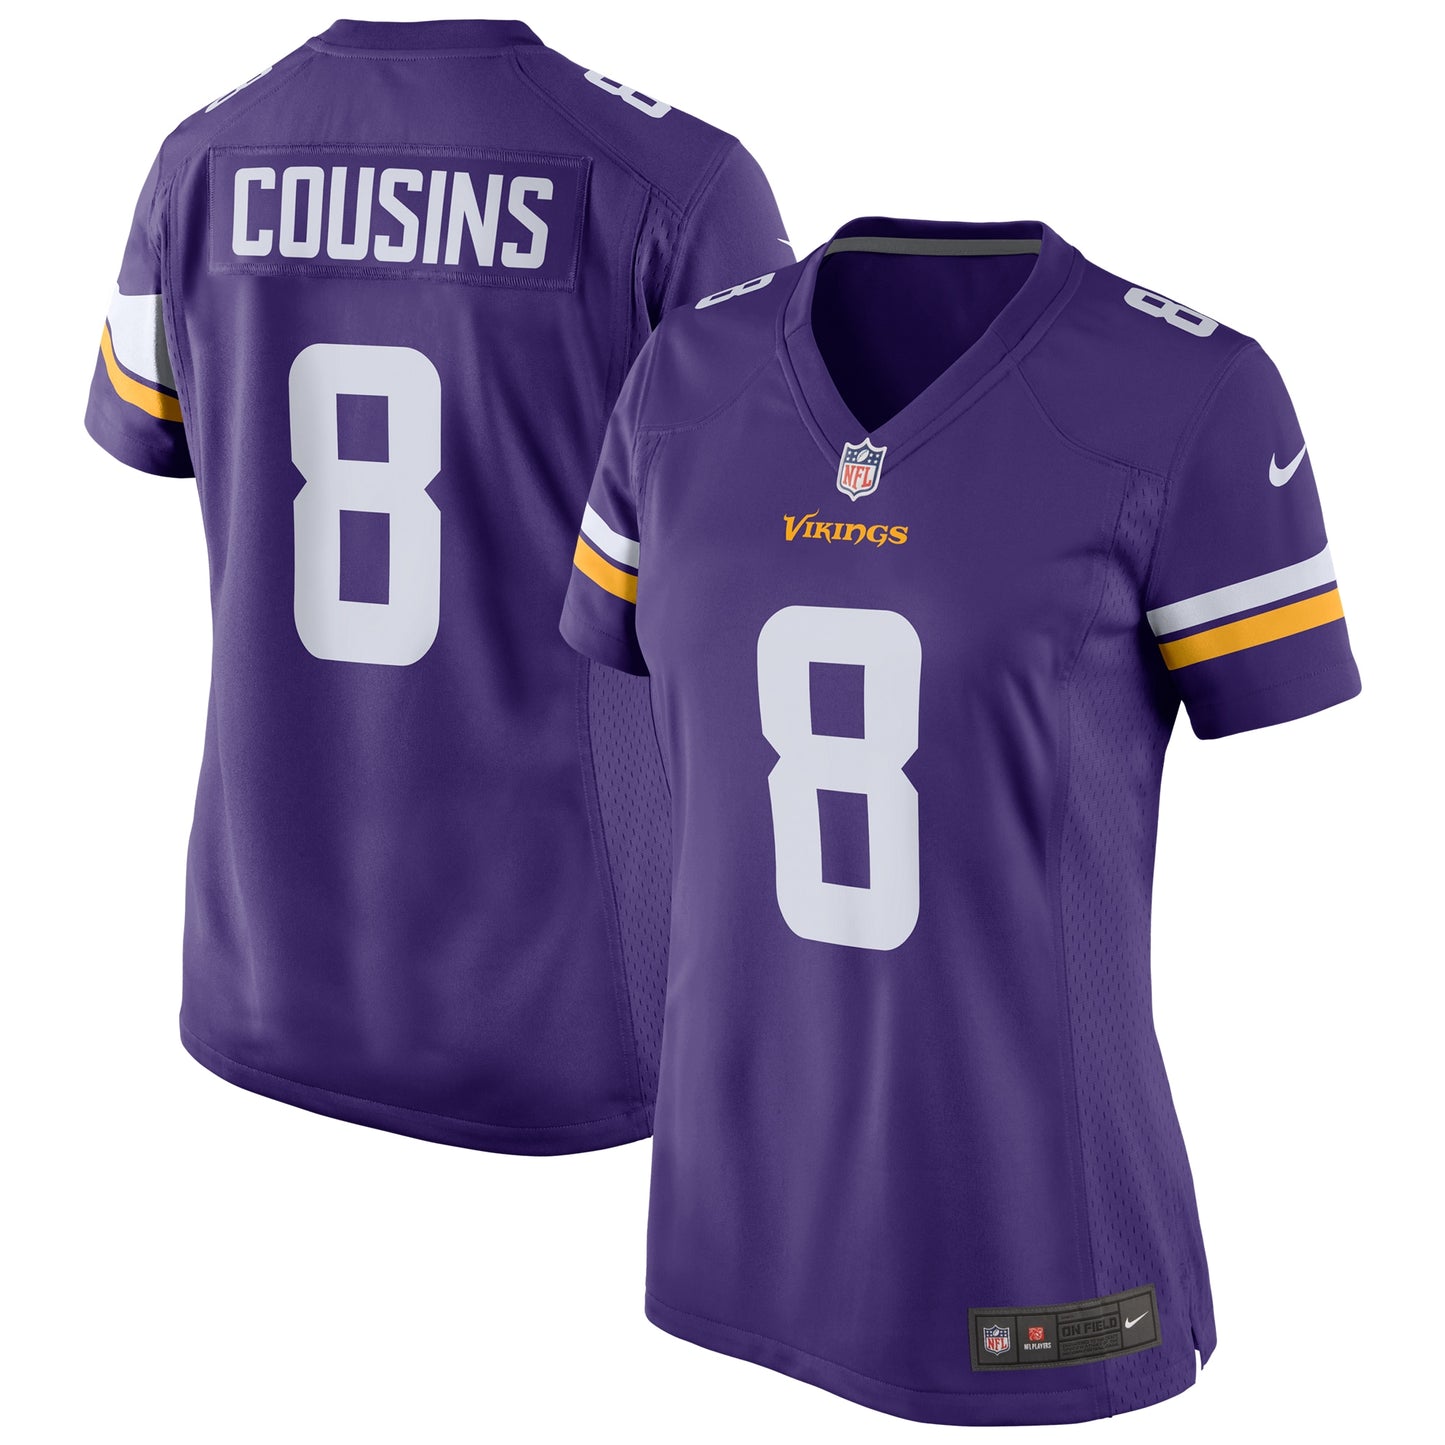 Kirk Cousins Minnesota Vikings Nike Women's Player Jersey - Purple